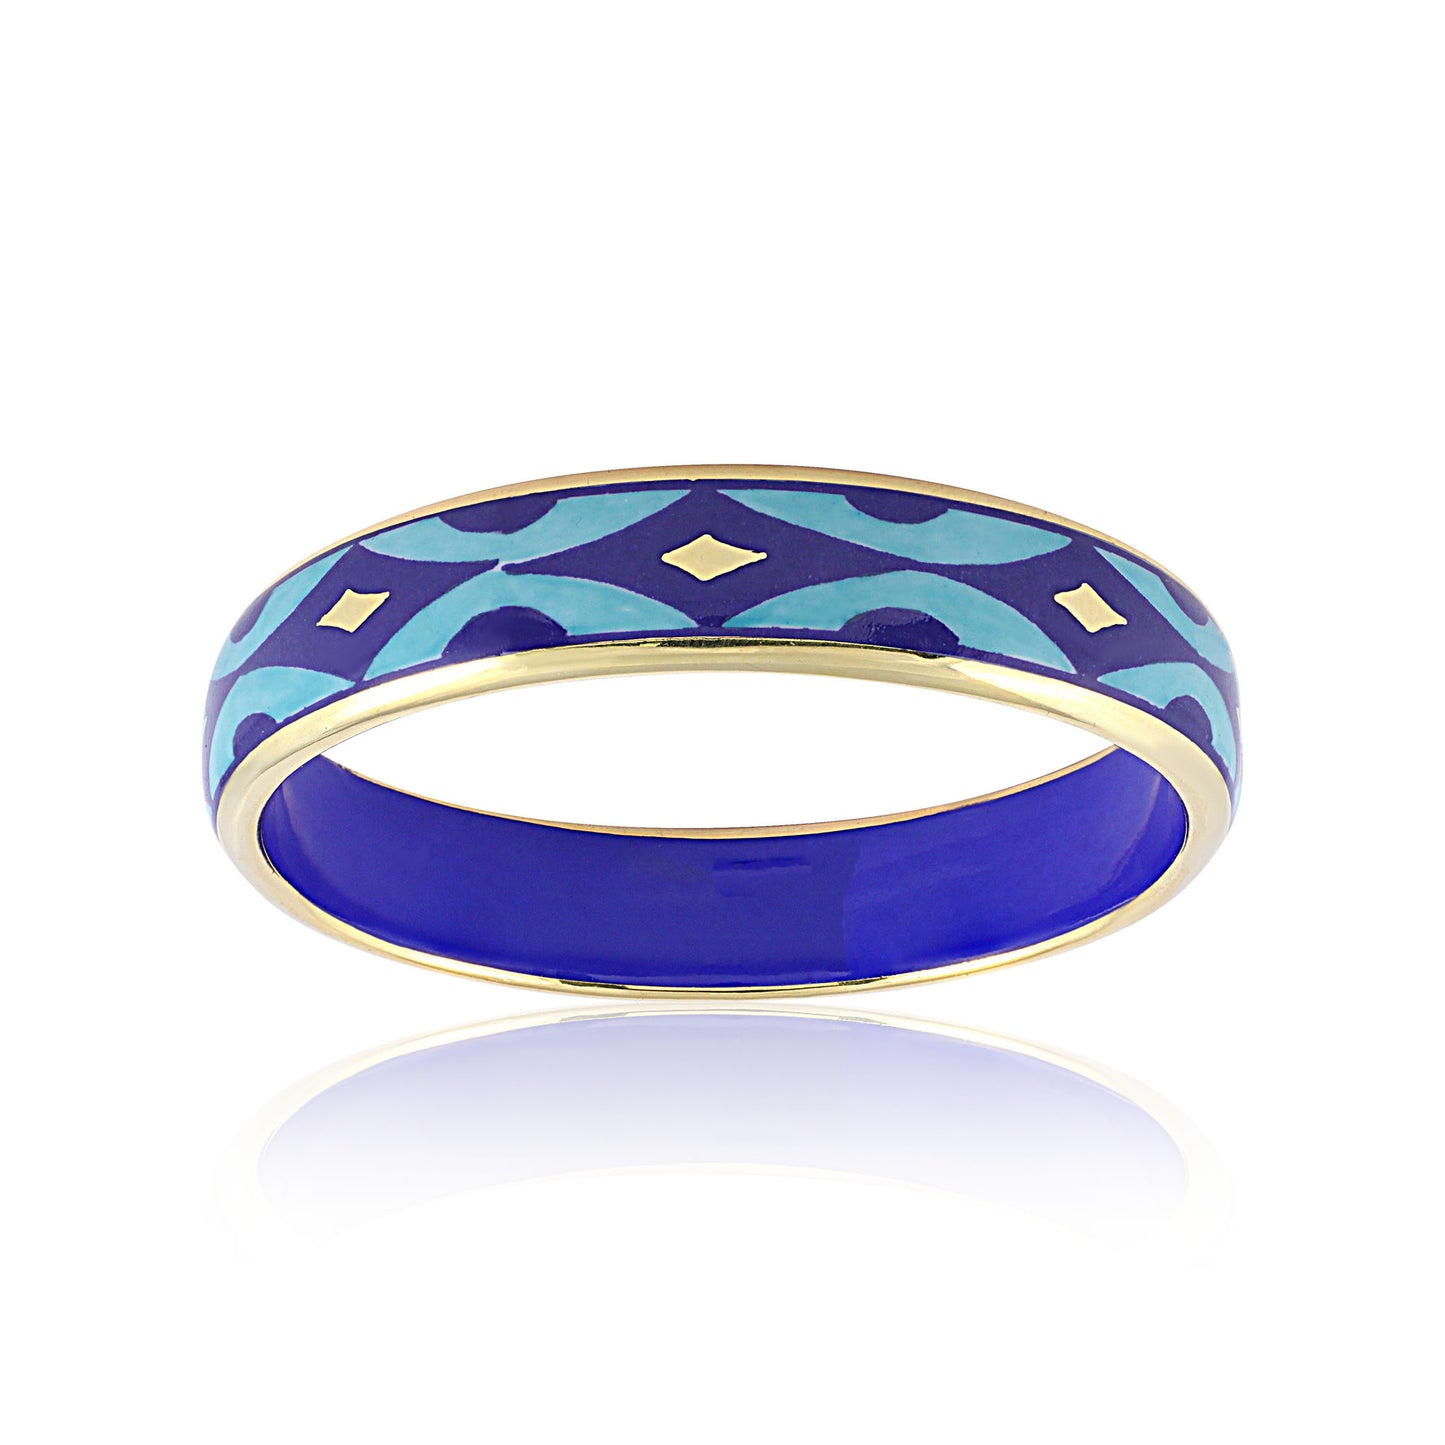 GOLD OF DESERT gold plated blue slim fine porcelain bracelet